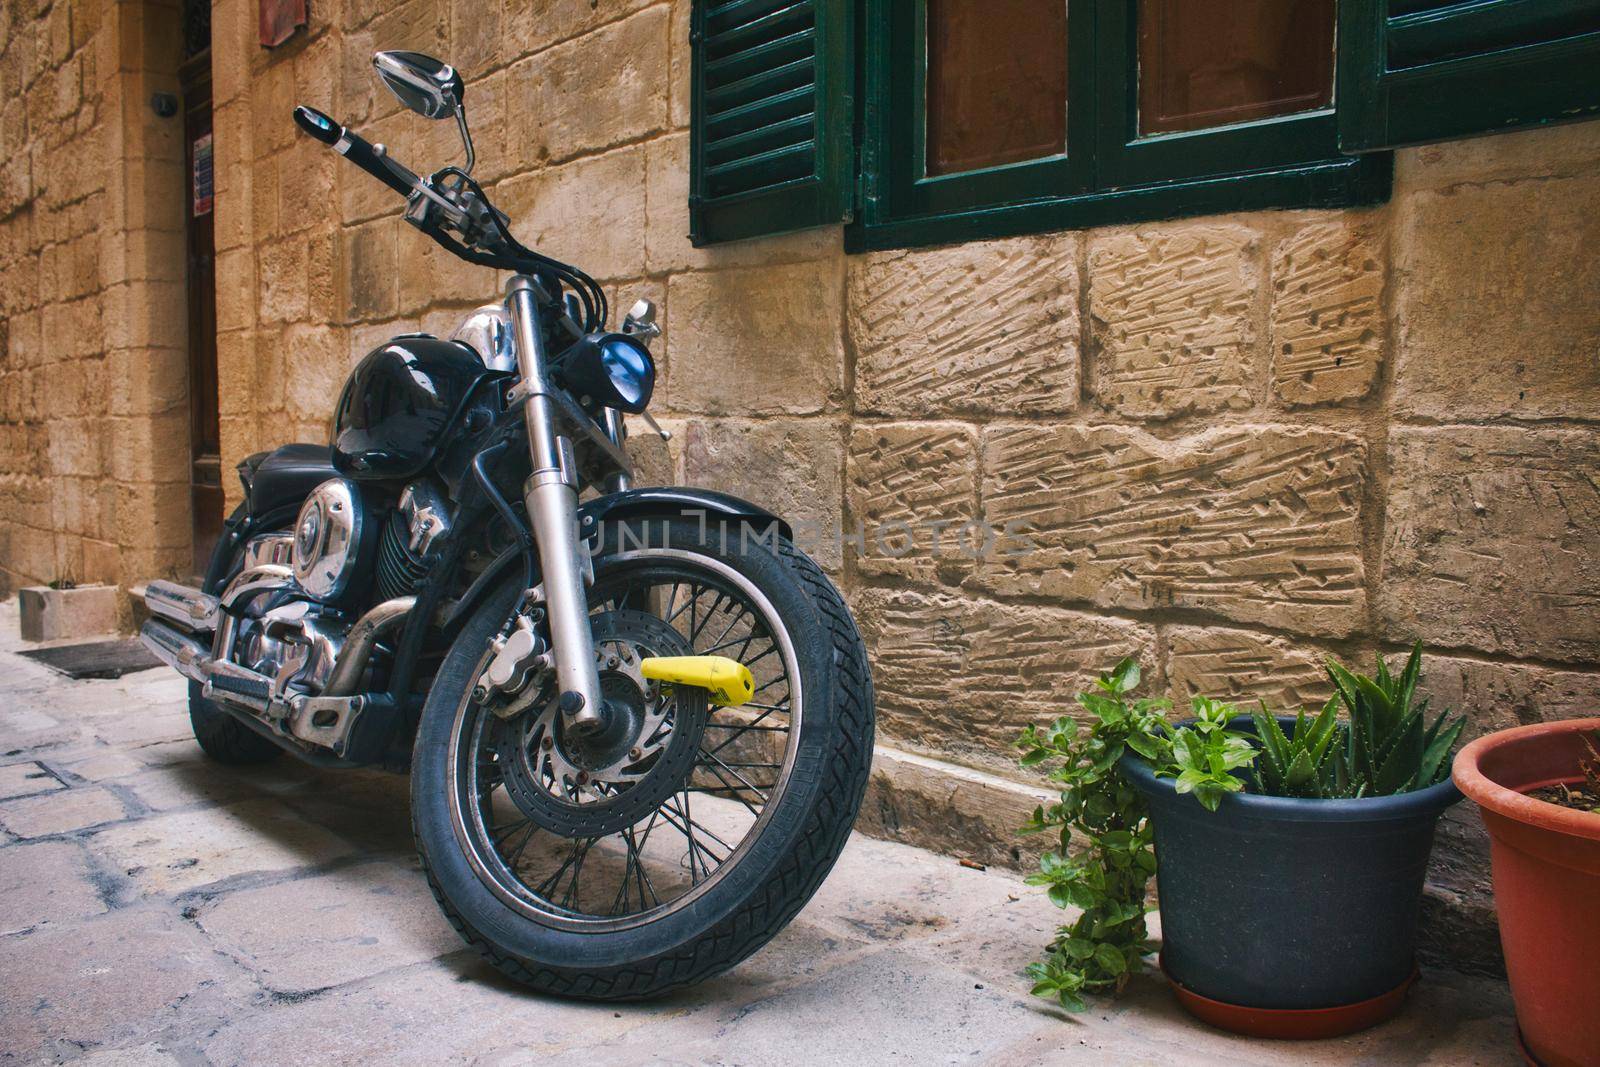 Motorbike parked in front of a Mediterranean rural village house